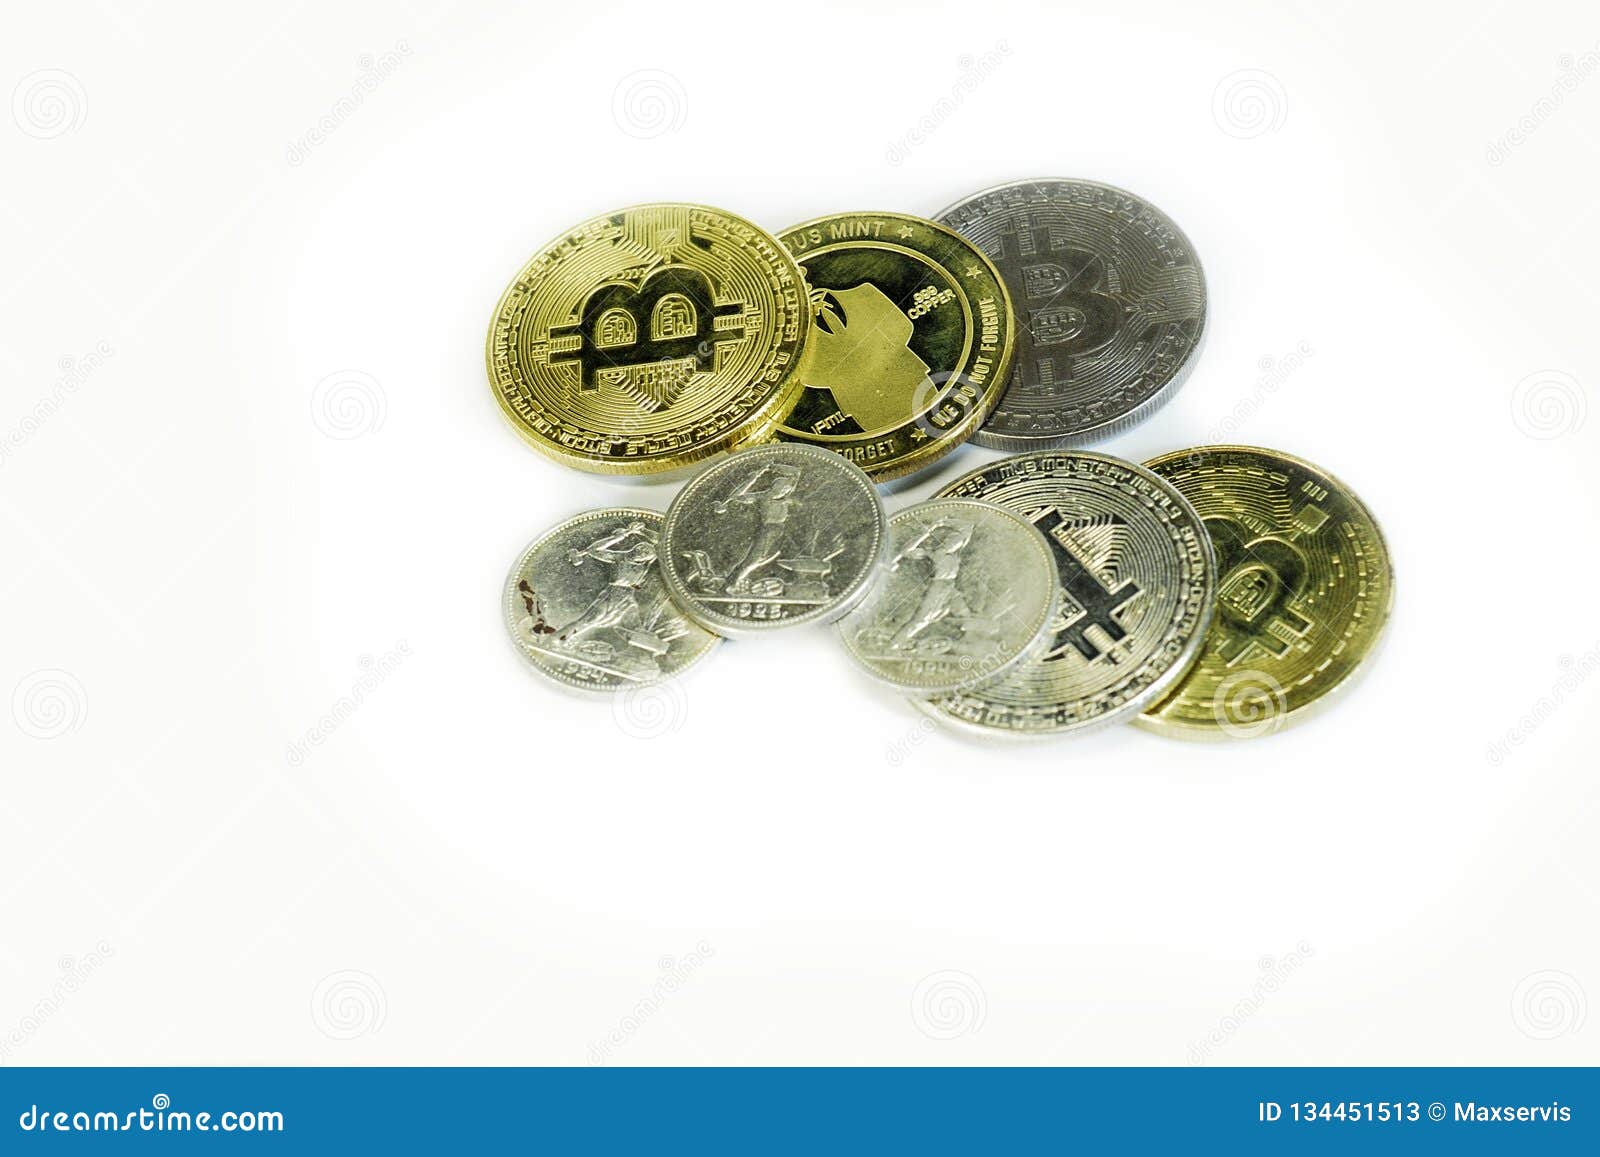 Bitcoin Mining Making Money Stock Image Image Of Savings Pound - 